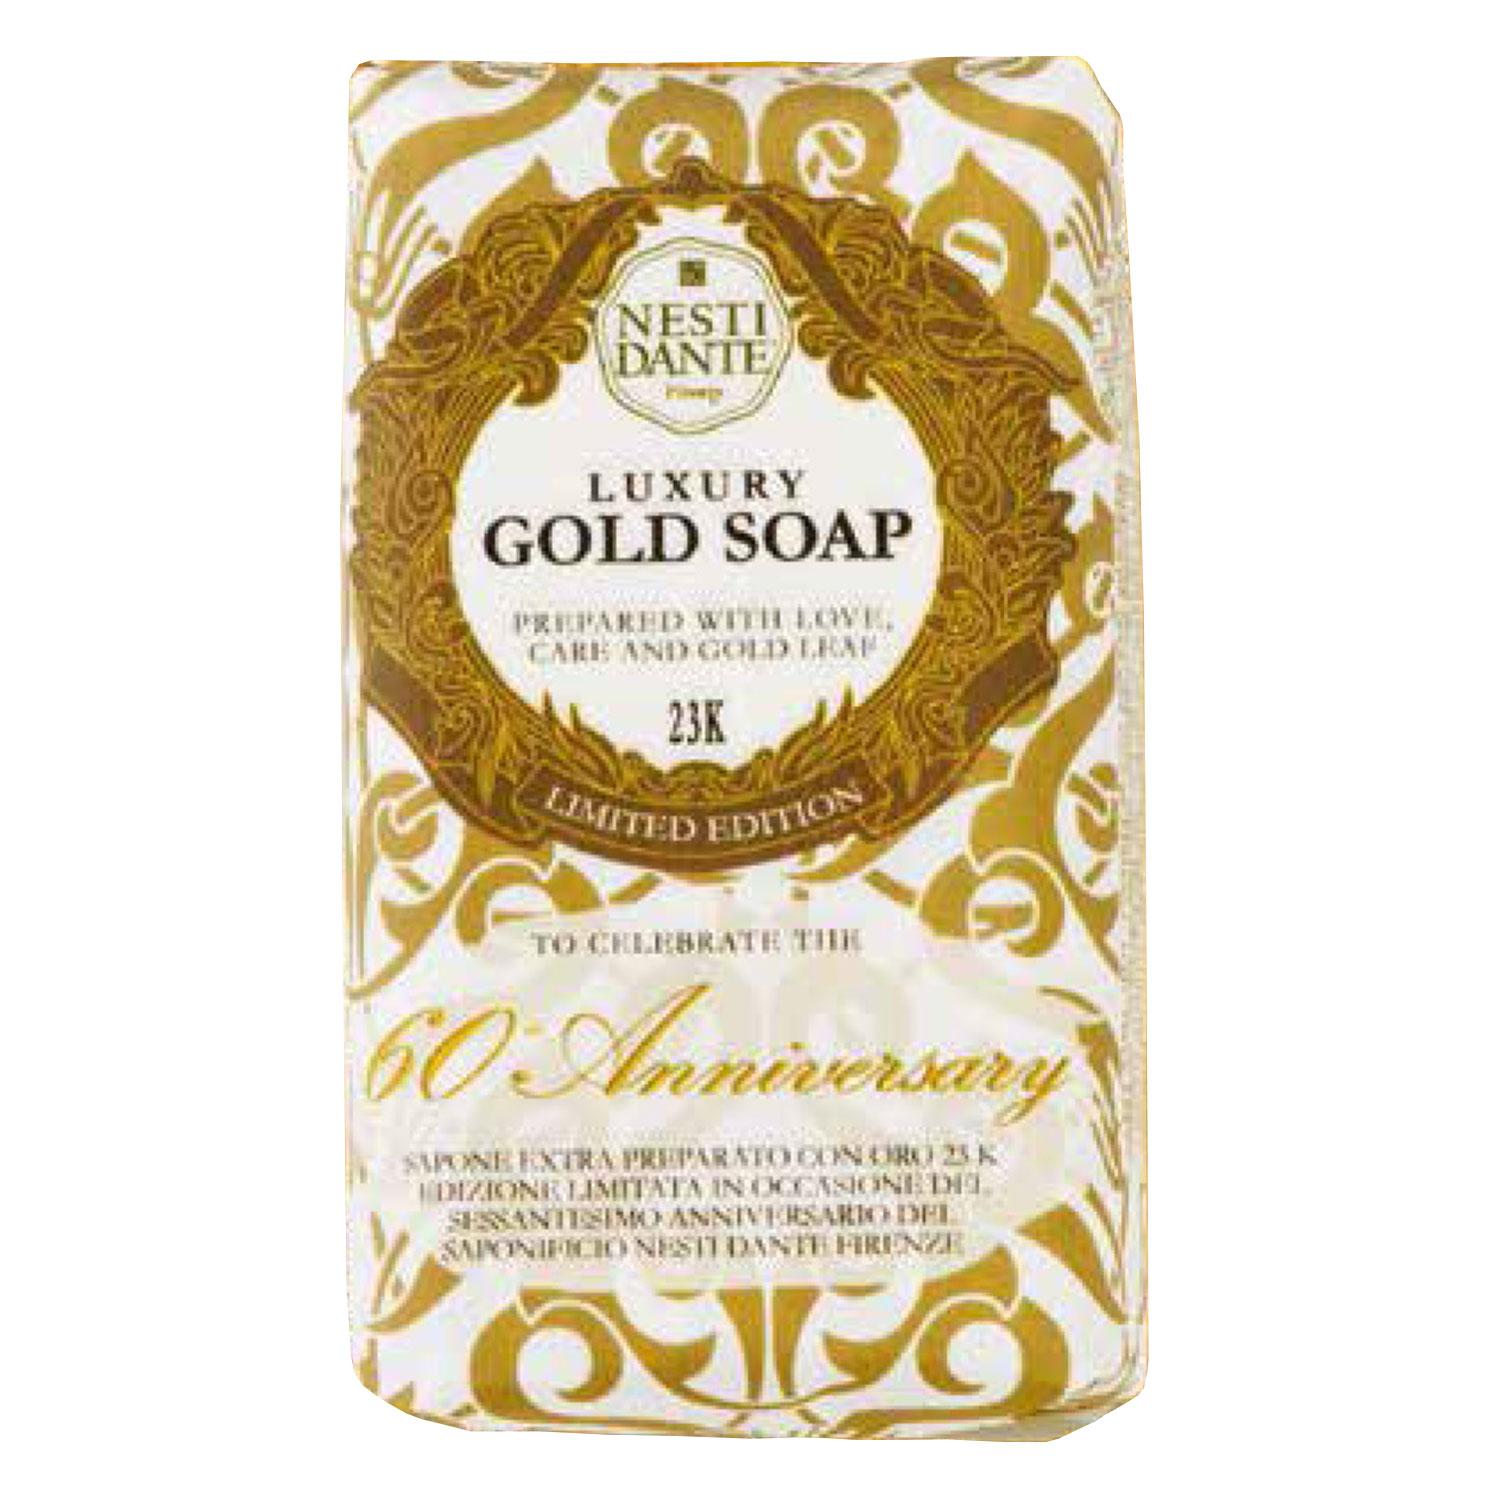 Nesti Dante - Luxury Gold Soap